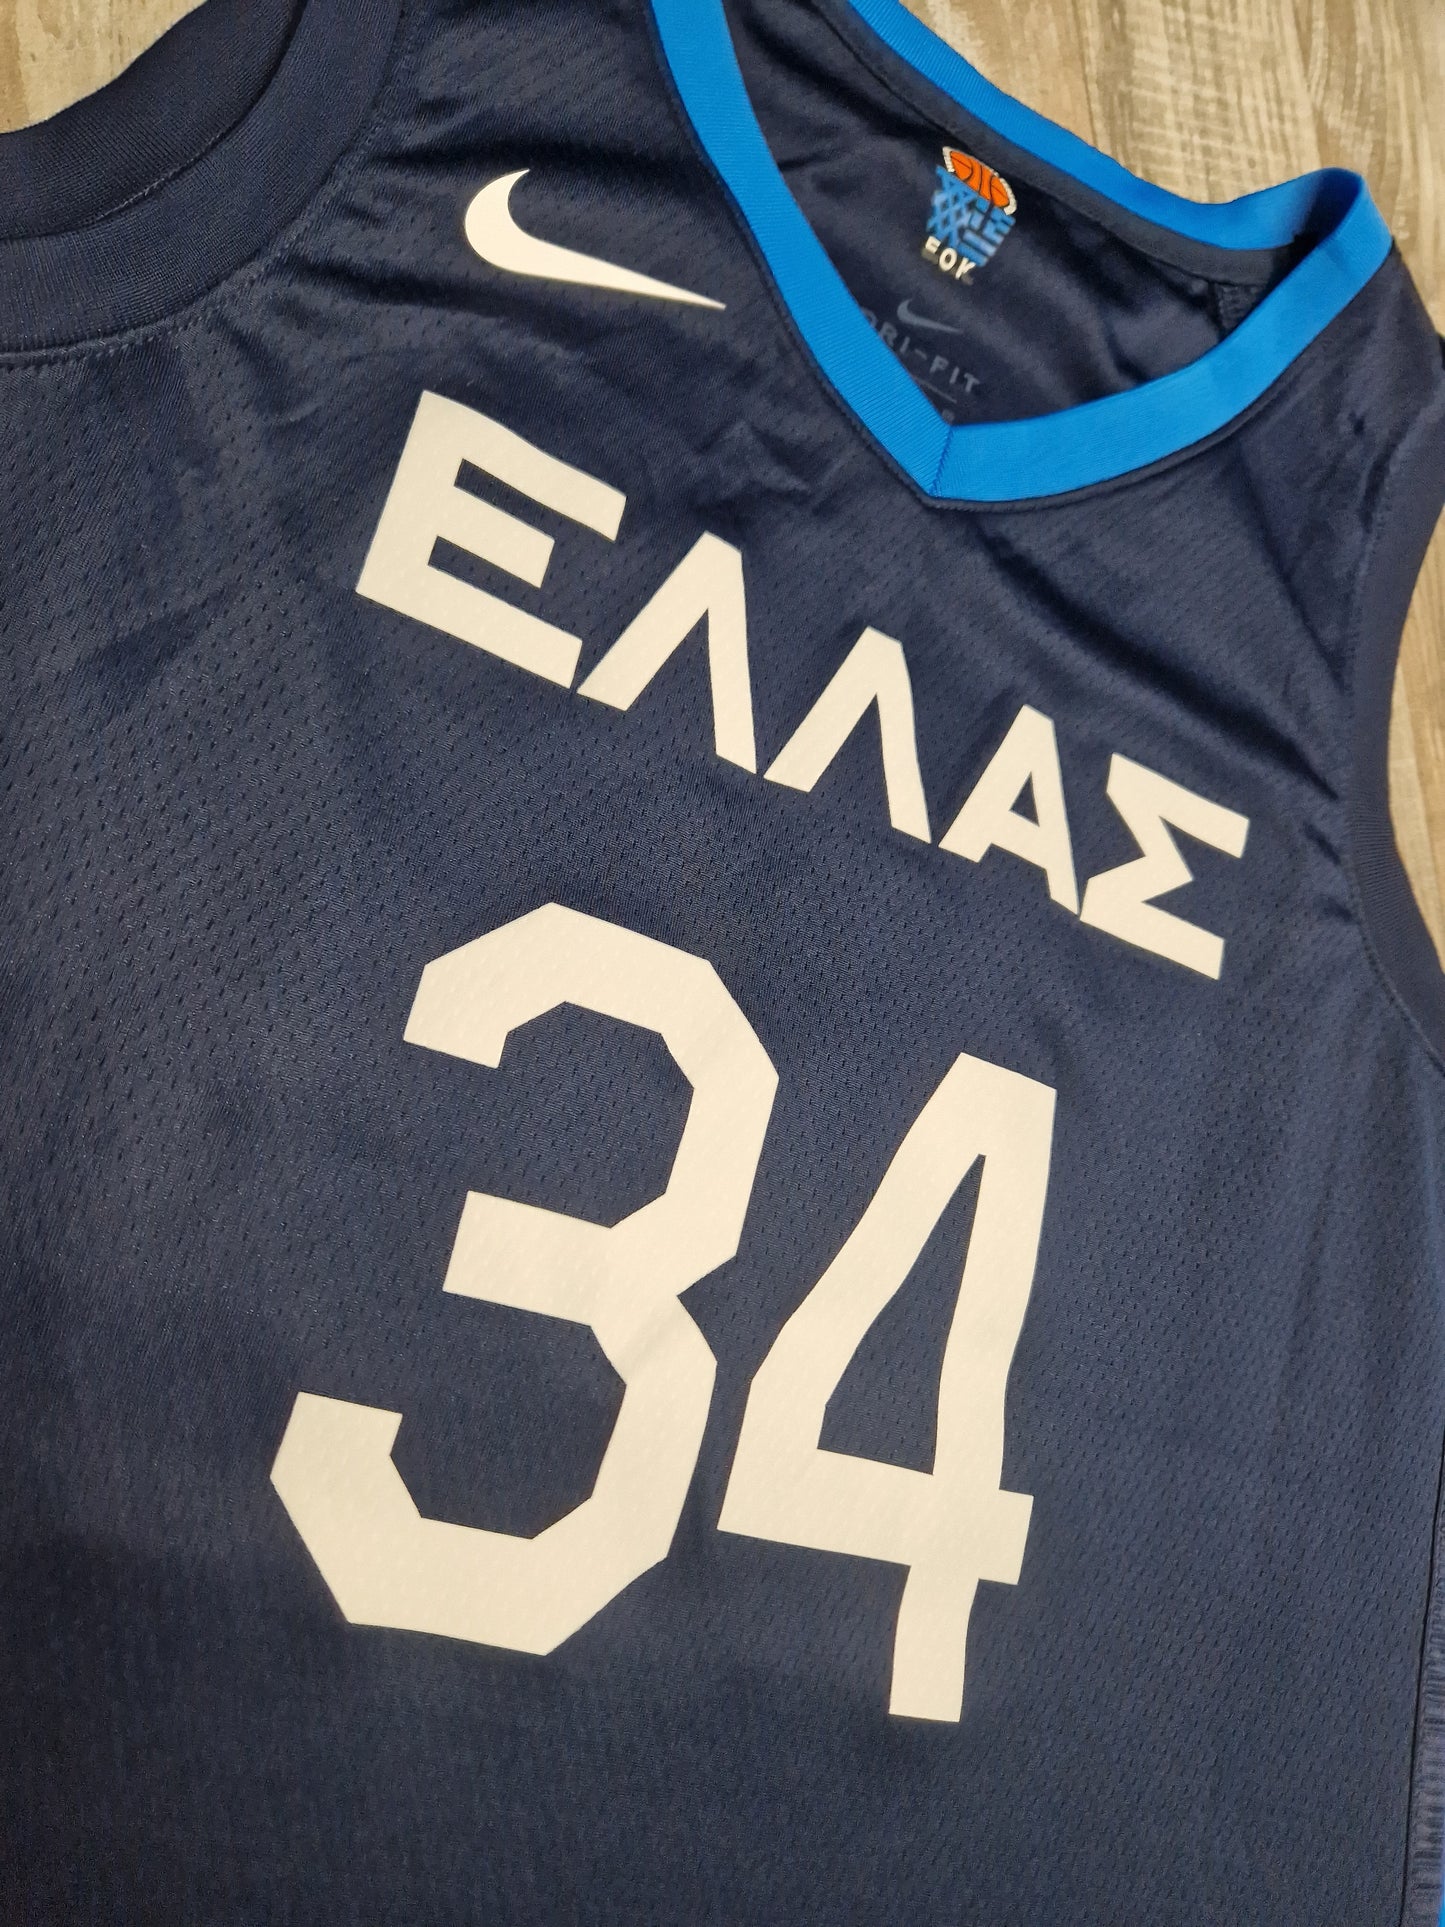 Giannis Antetokounmpo Greece Basketball Jersey Size XL